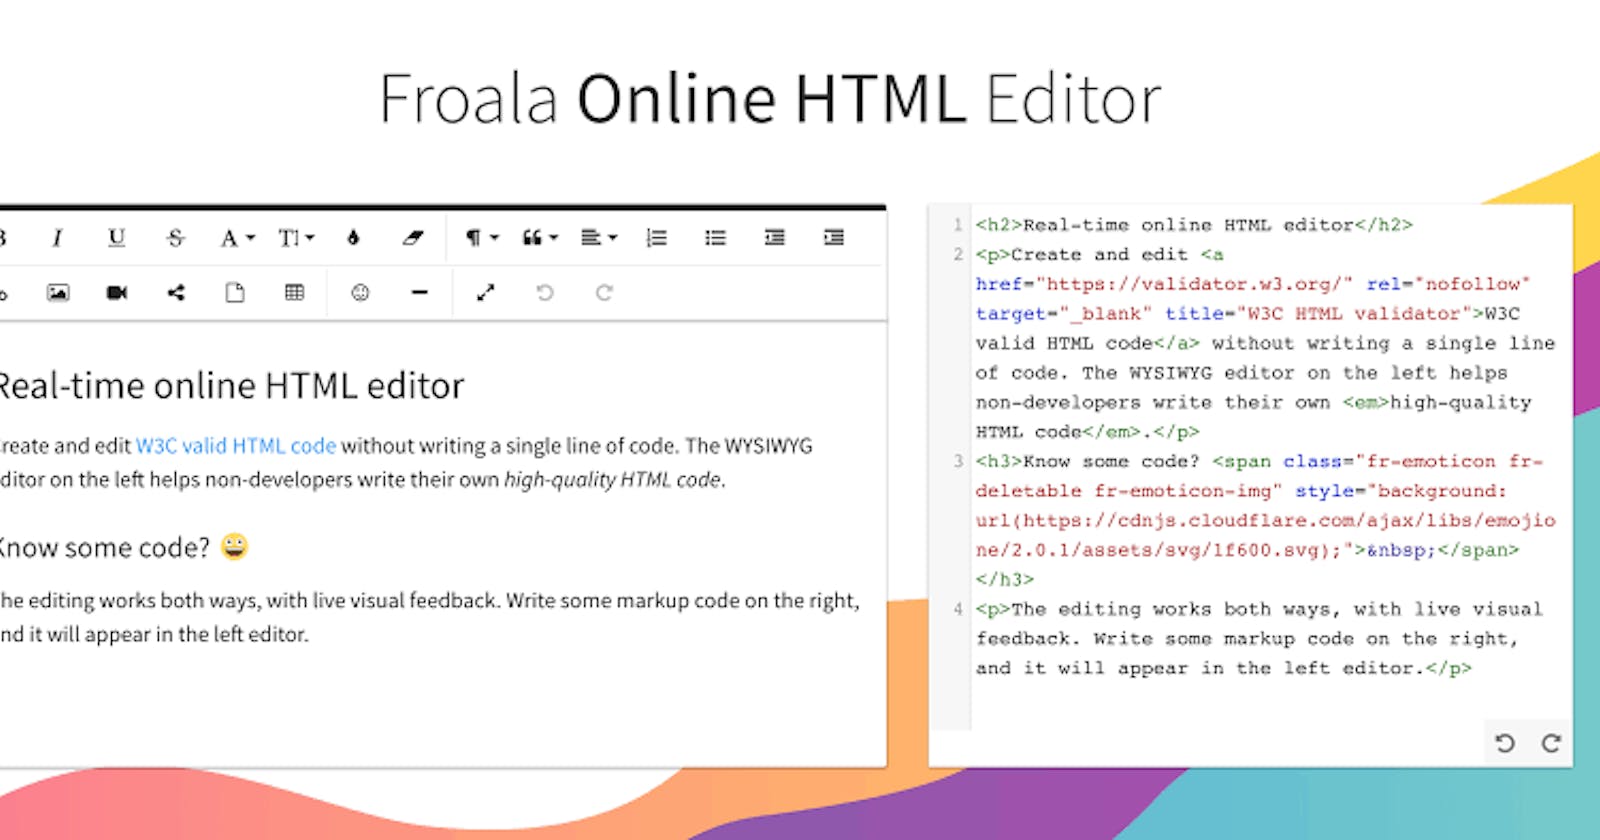 Froala Editor's Online Presence